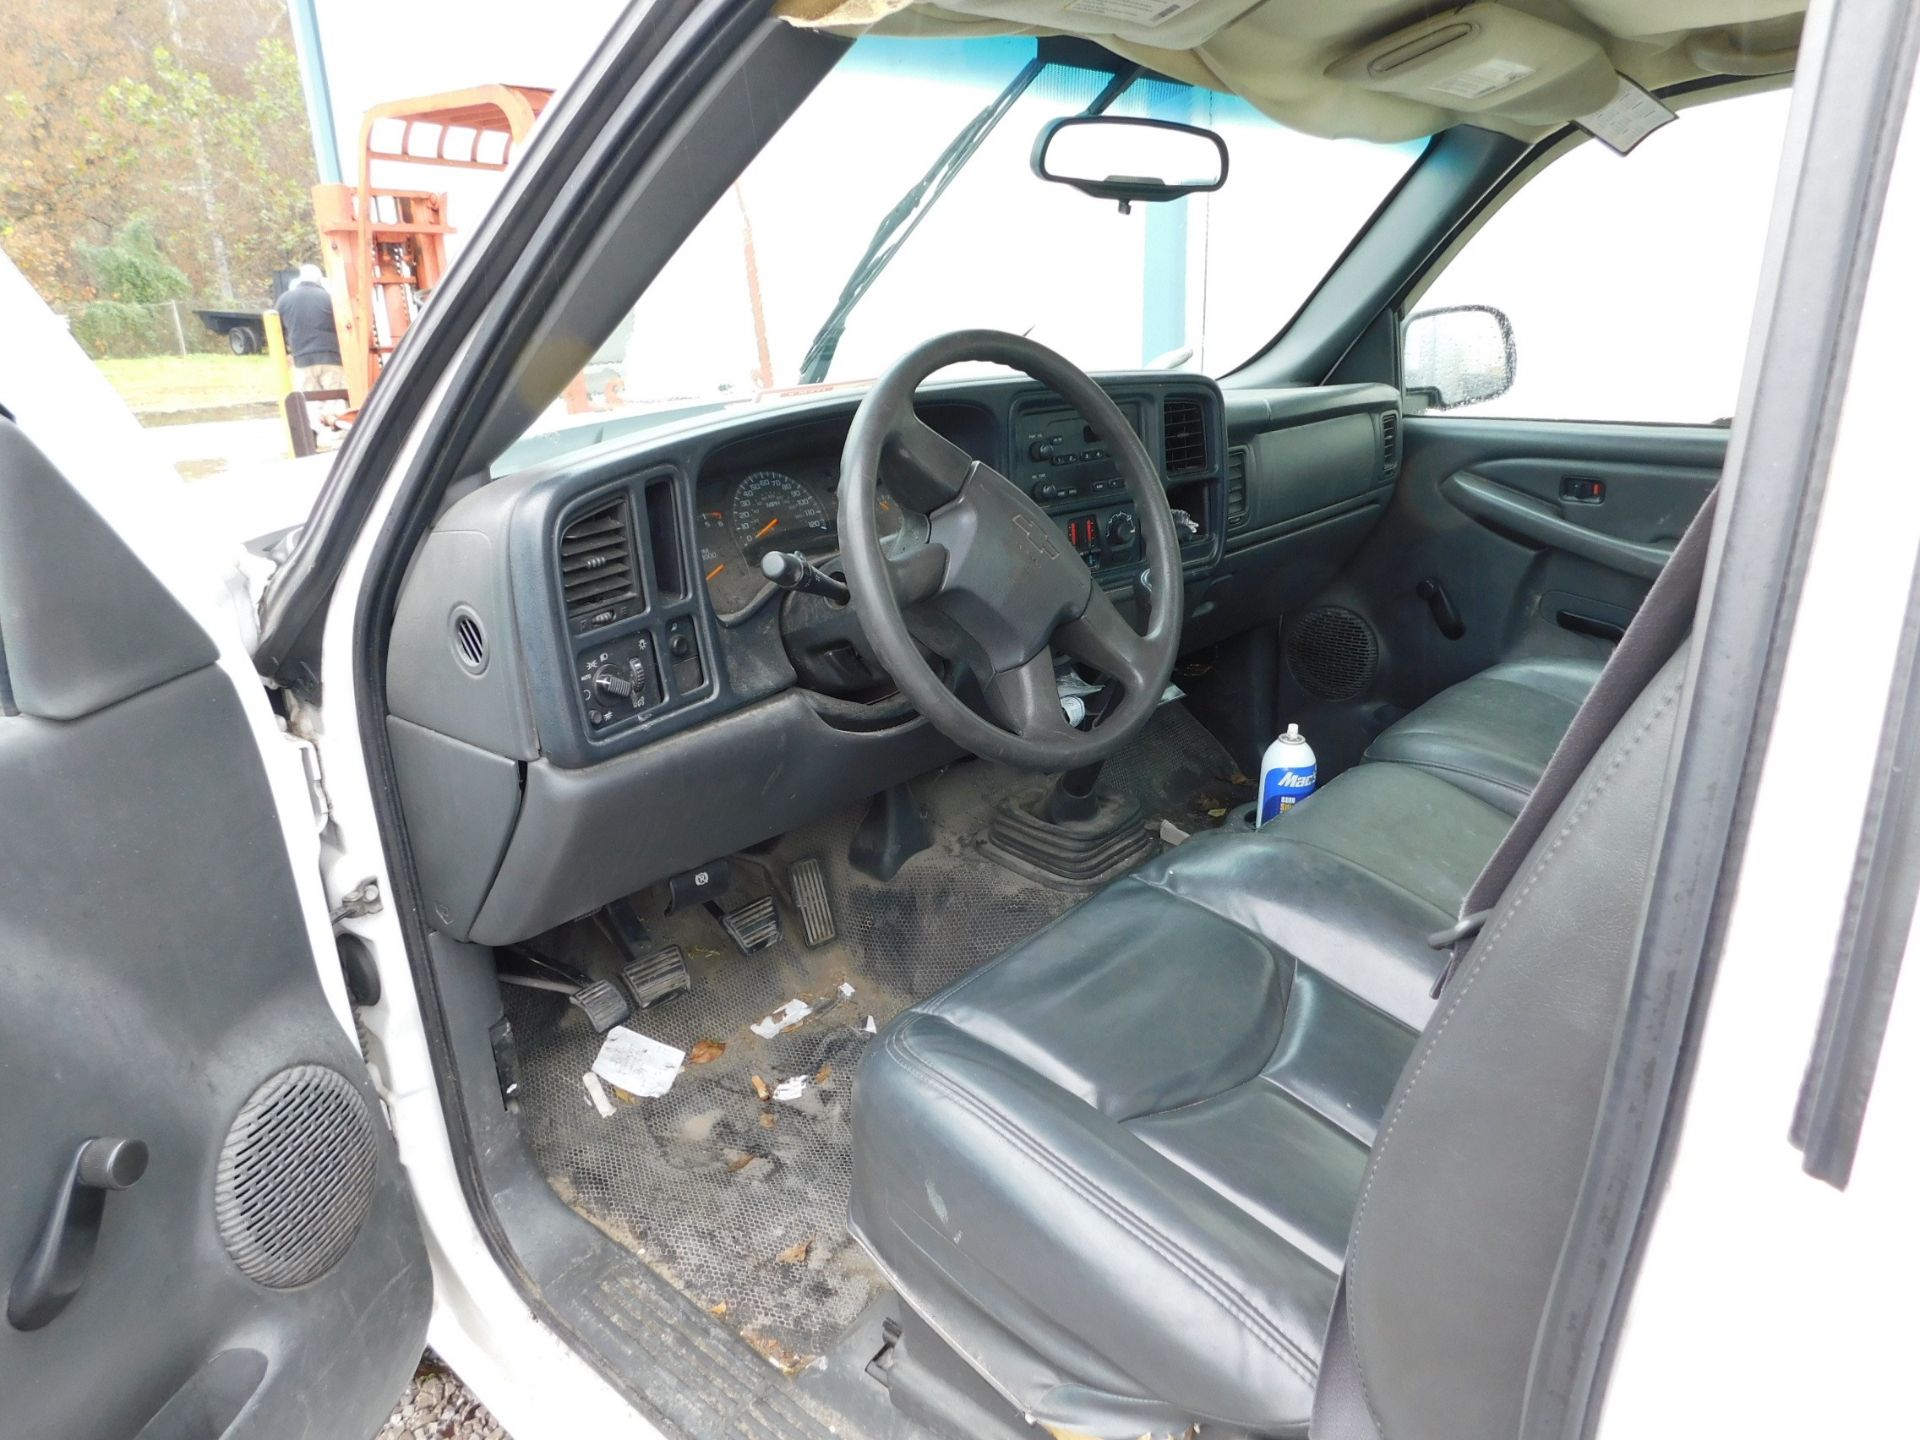 2006 Chevy 1500 Pickup, V-6 Gas, 5 Speed, Odometer 159,299, VIN 3GCEC14X46G237704 - Image 3 of 4